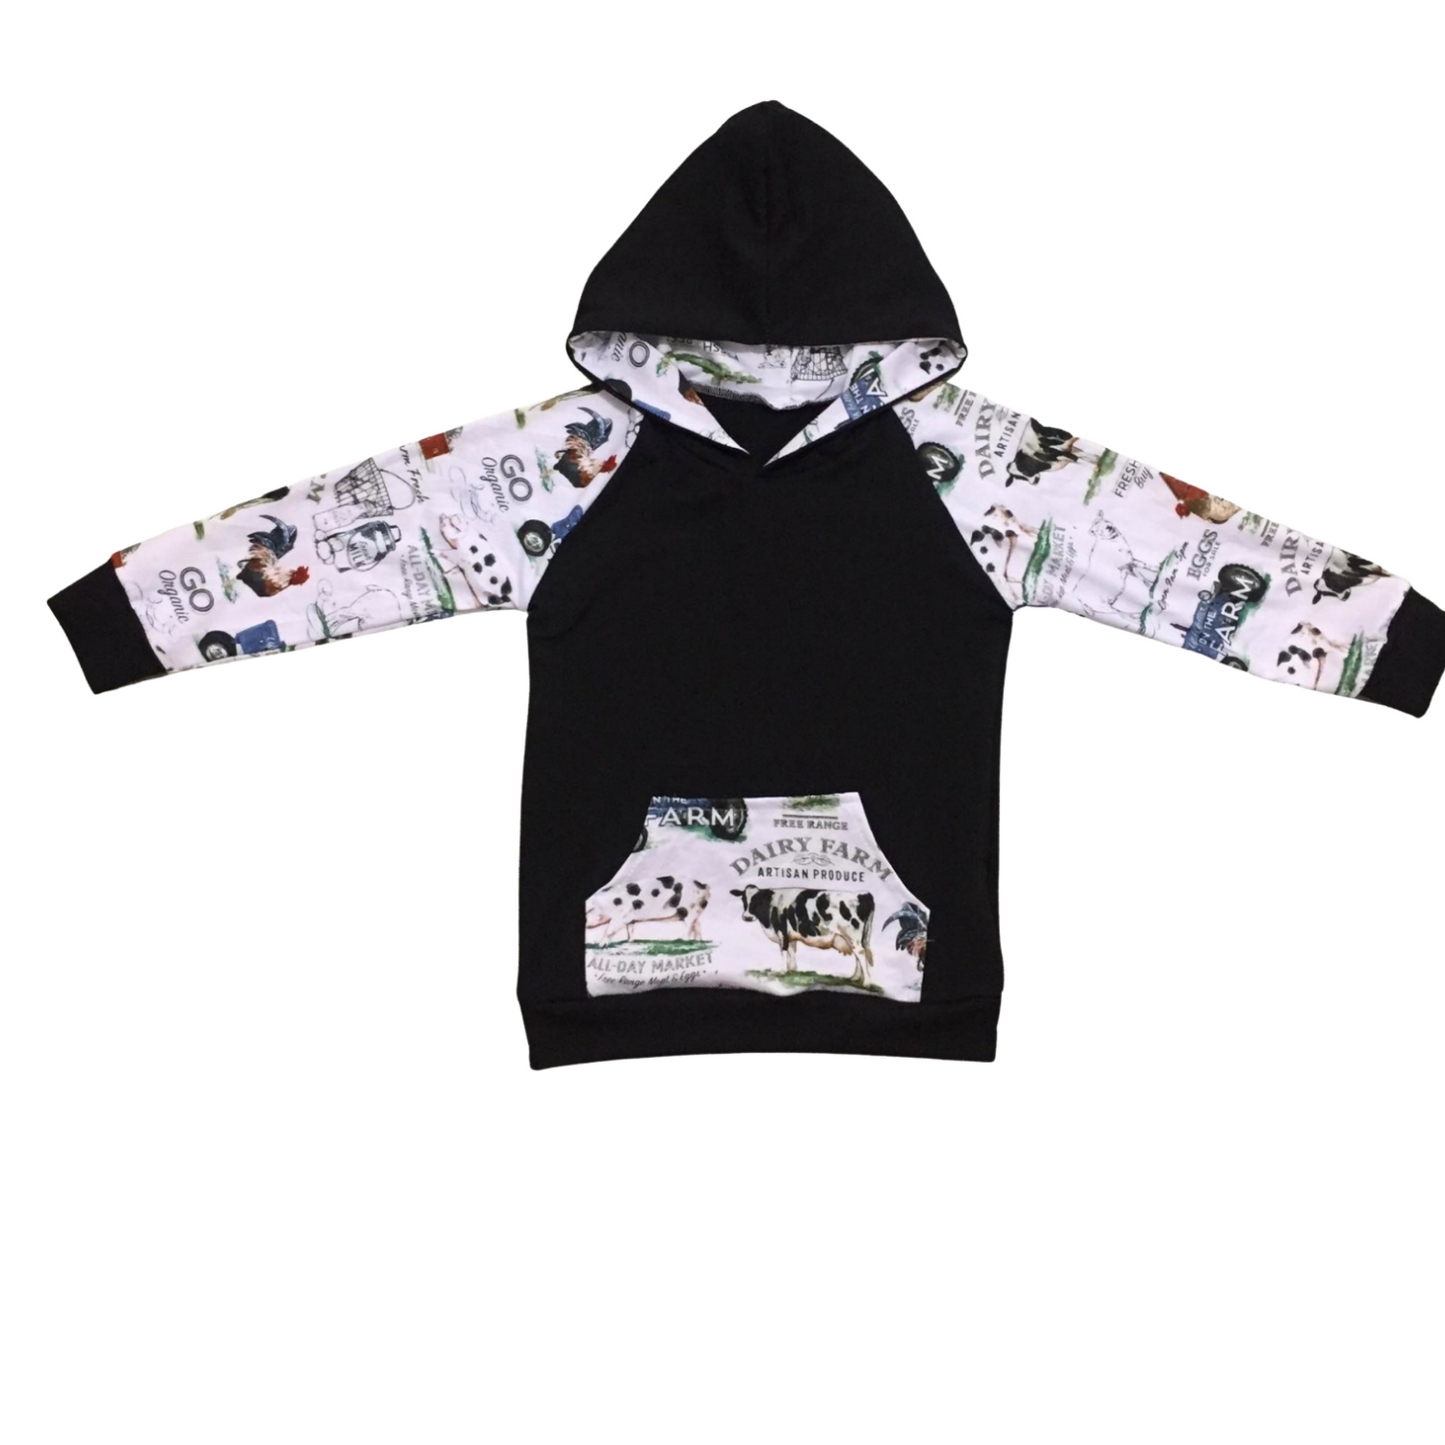 Farm kid Style Hoodie (SWS3020)-Shirts & Tops-Sparkledots-sparkledots